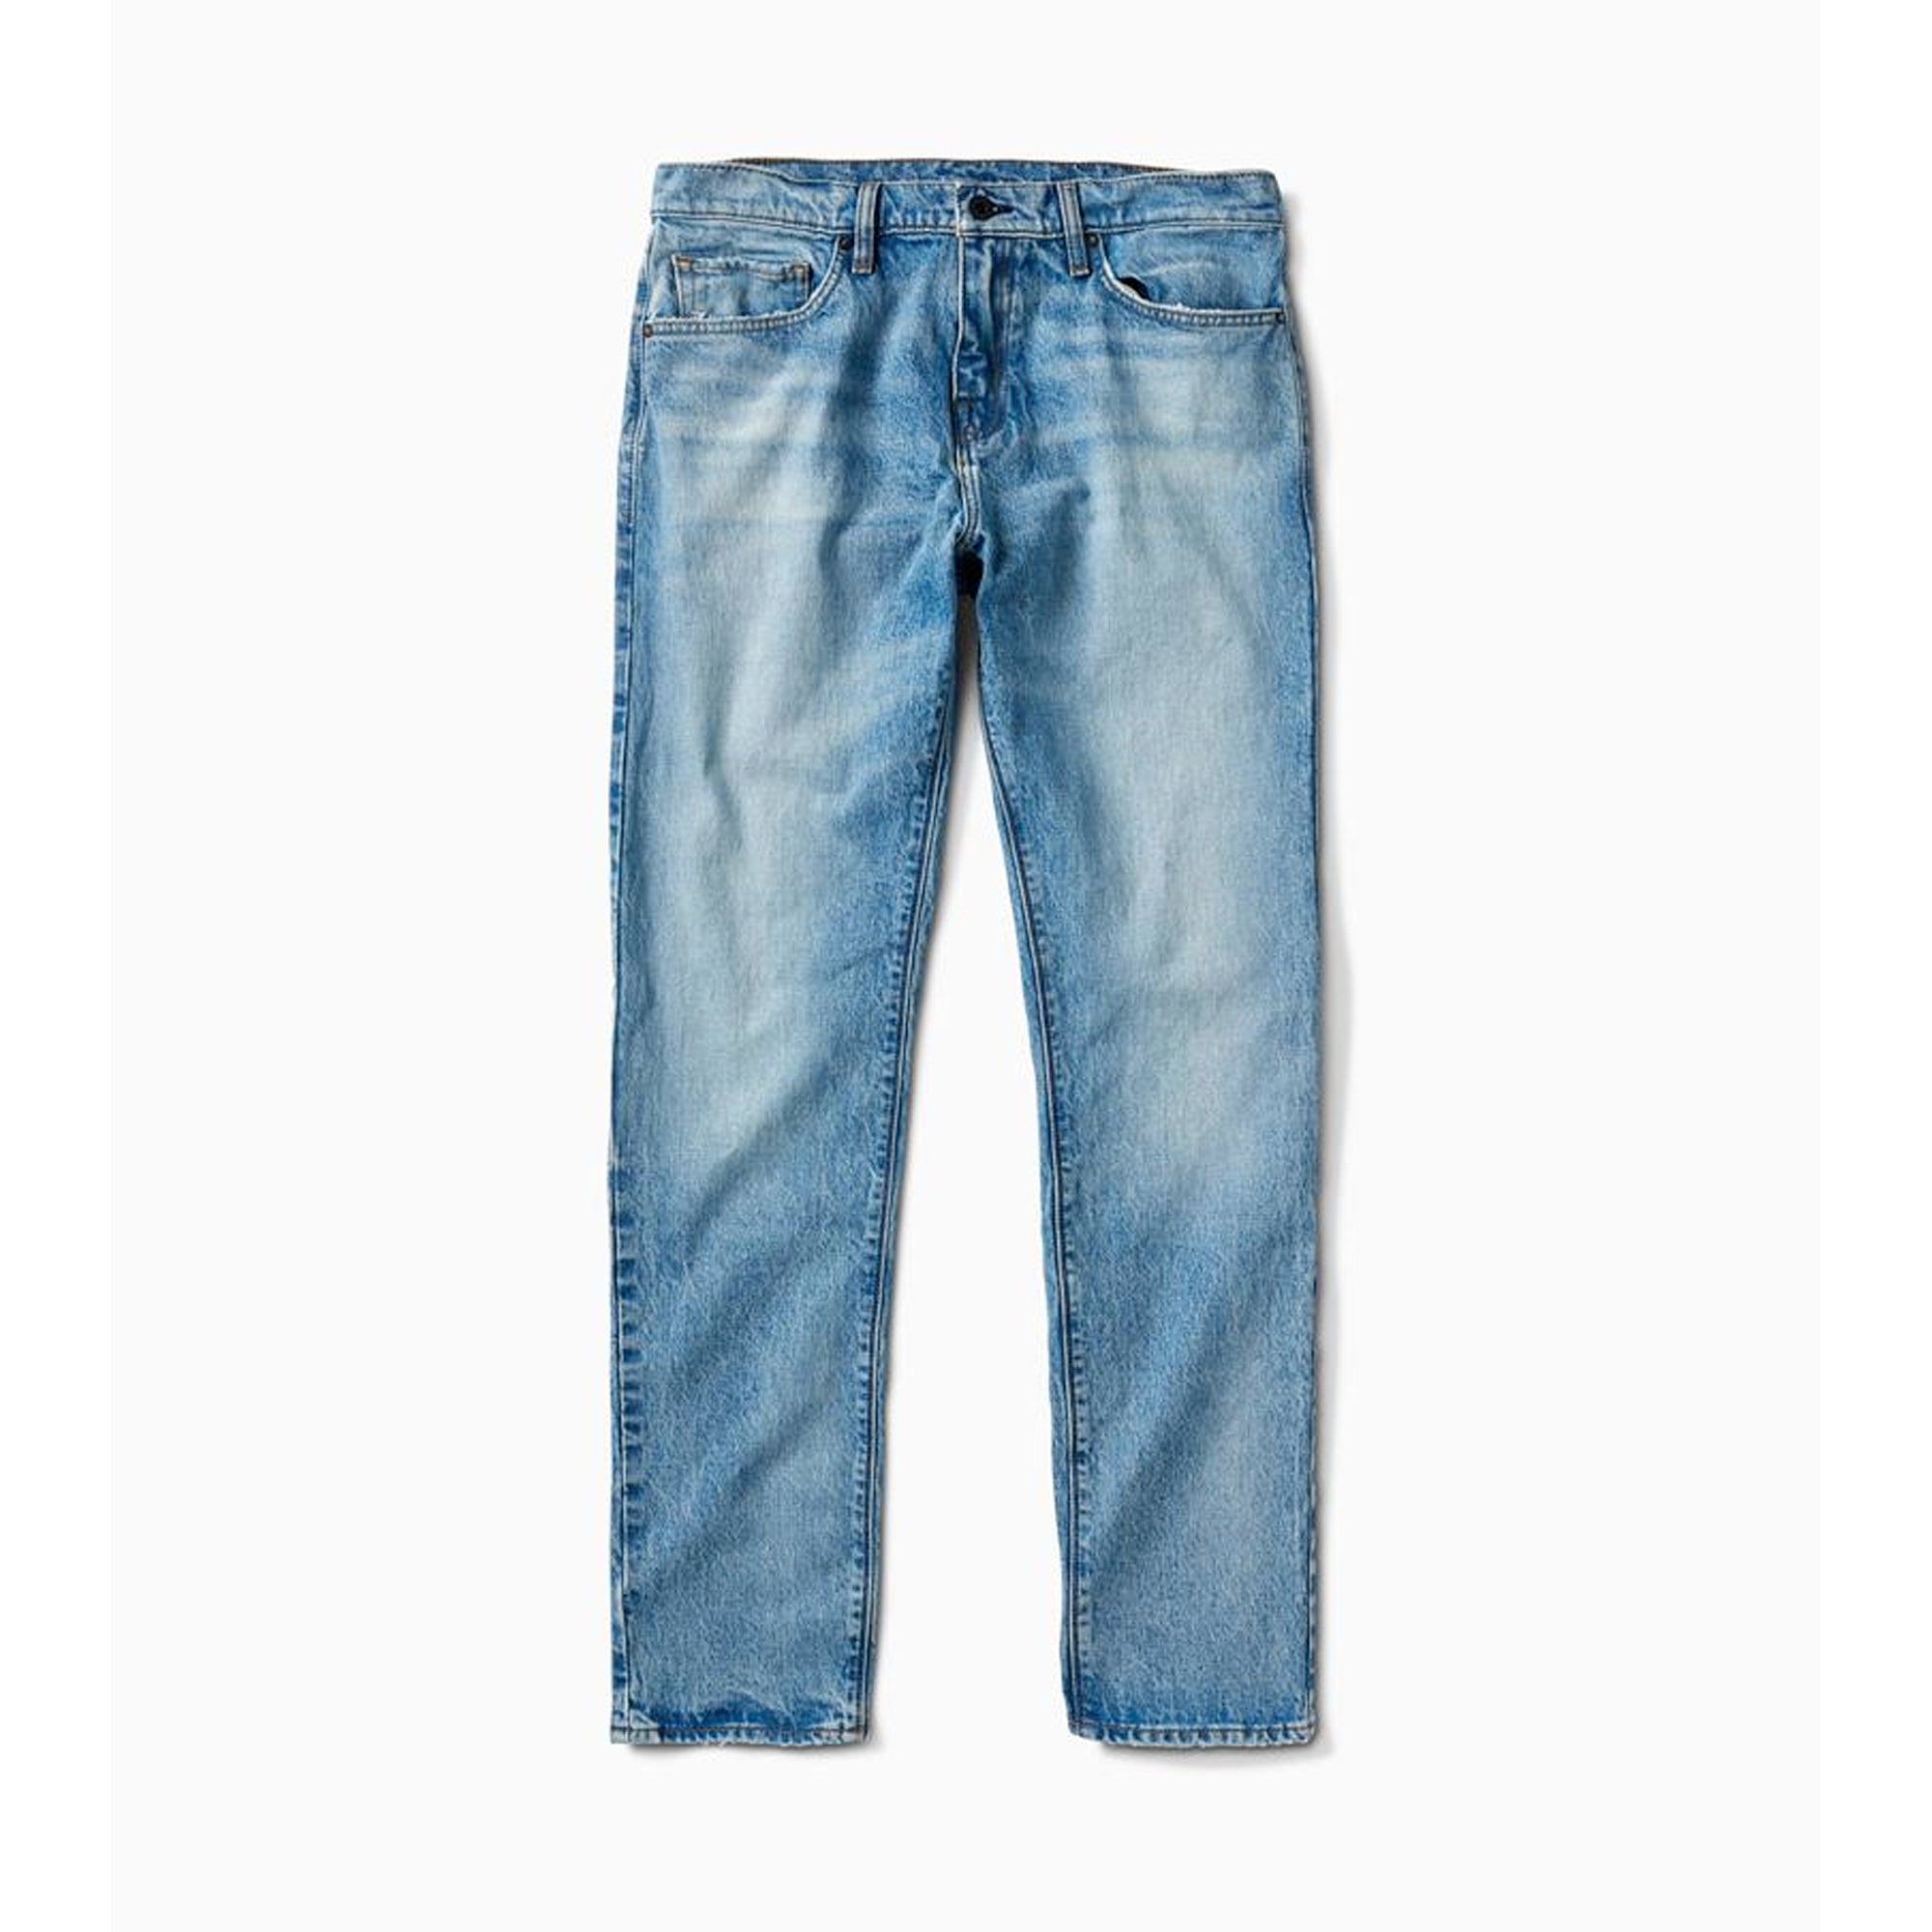 Roark Hwy 128 Straight Fit Men's Denim Jeans